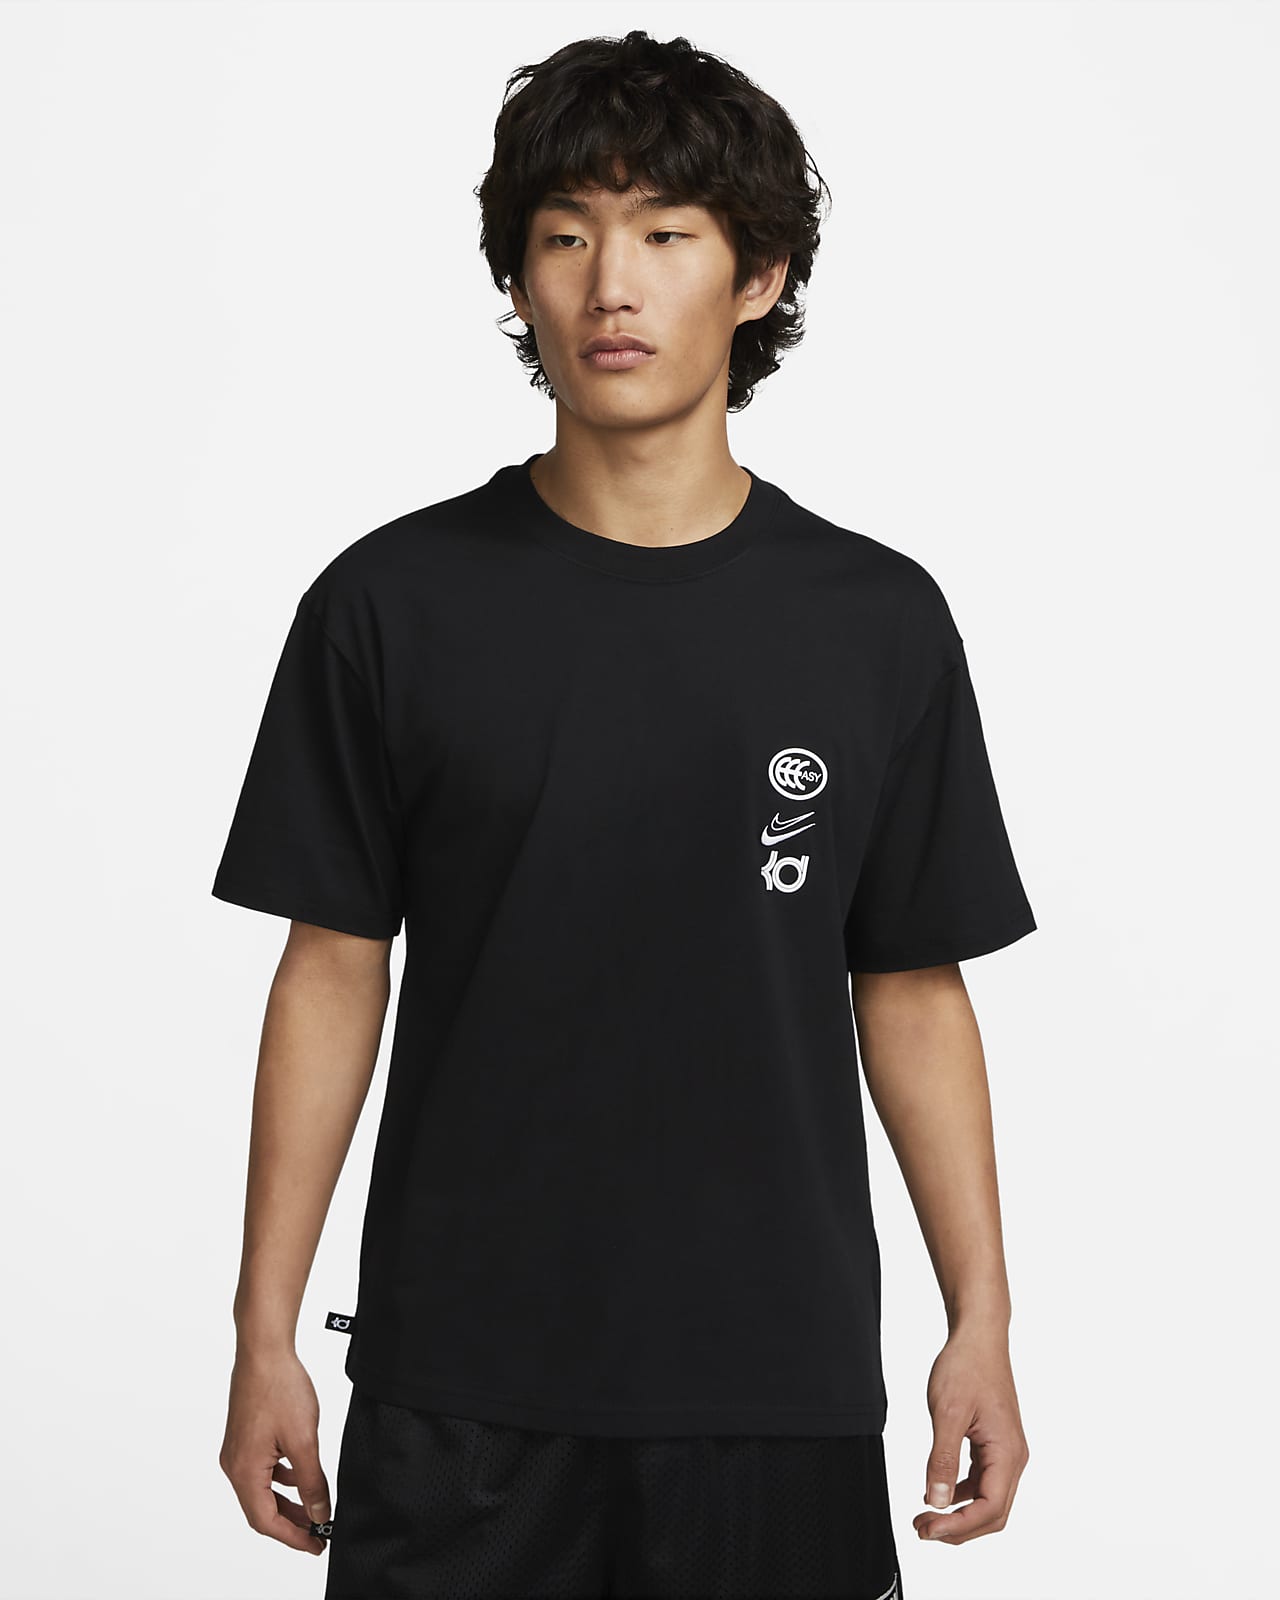 Kevin Durant Nike Max 90 Men's Basketball T-Shirt